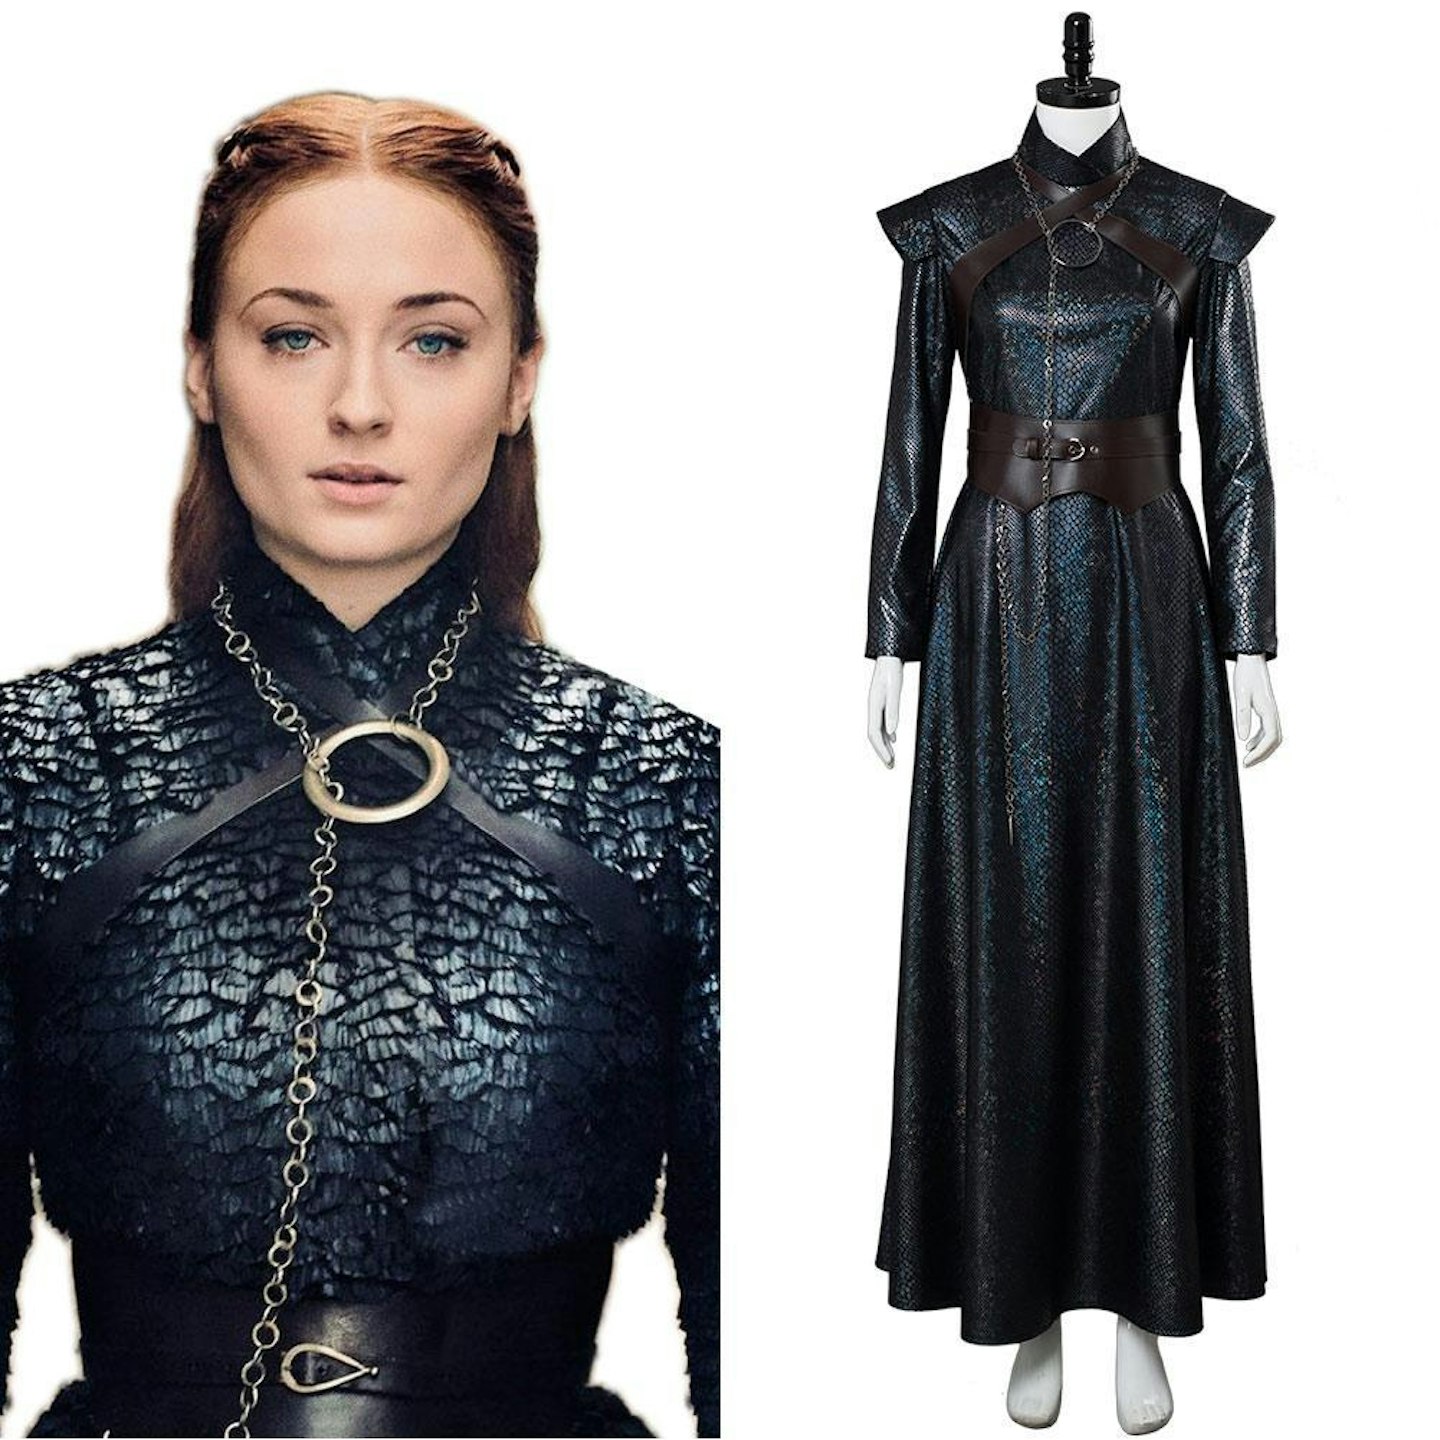 Sansa Stark costume